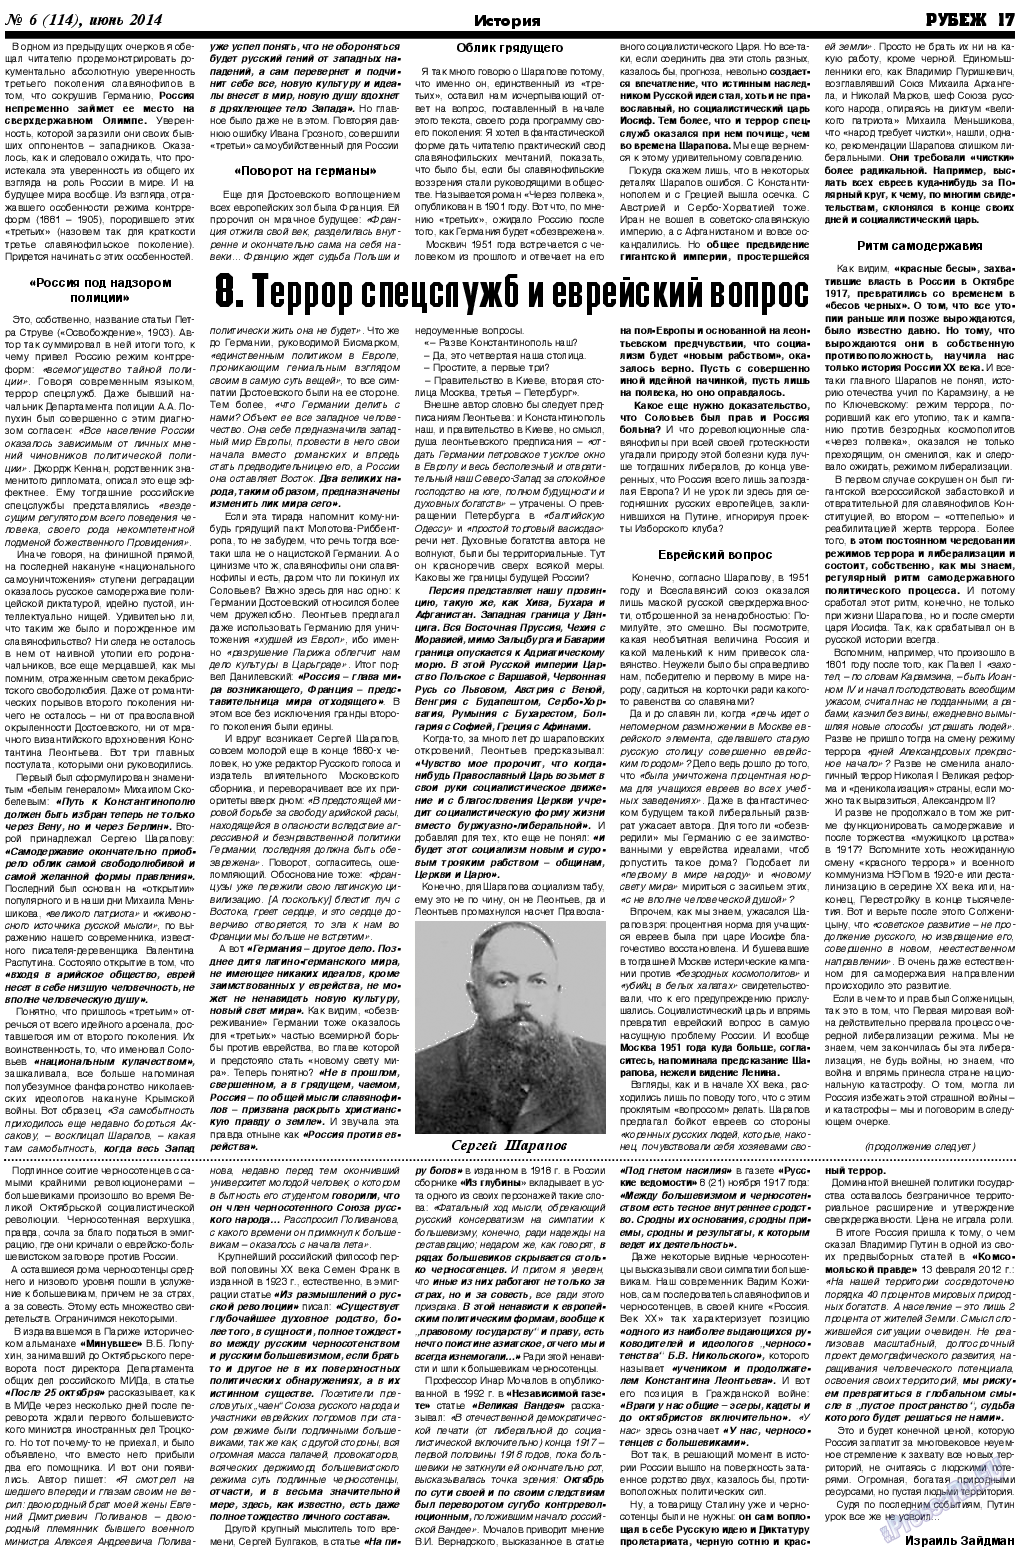 Рубеж, газета. 2014 №6 стр.17